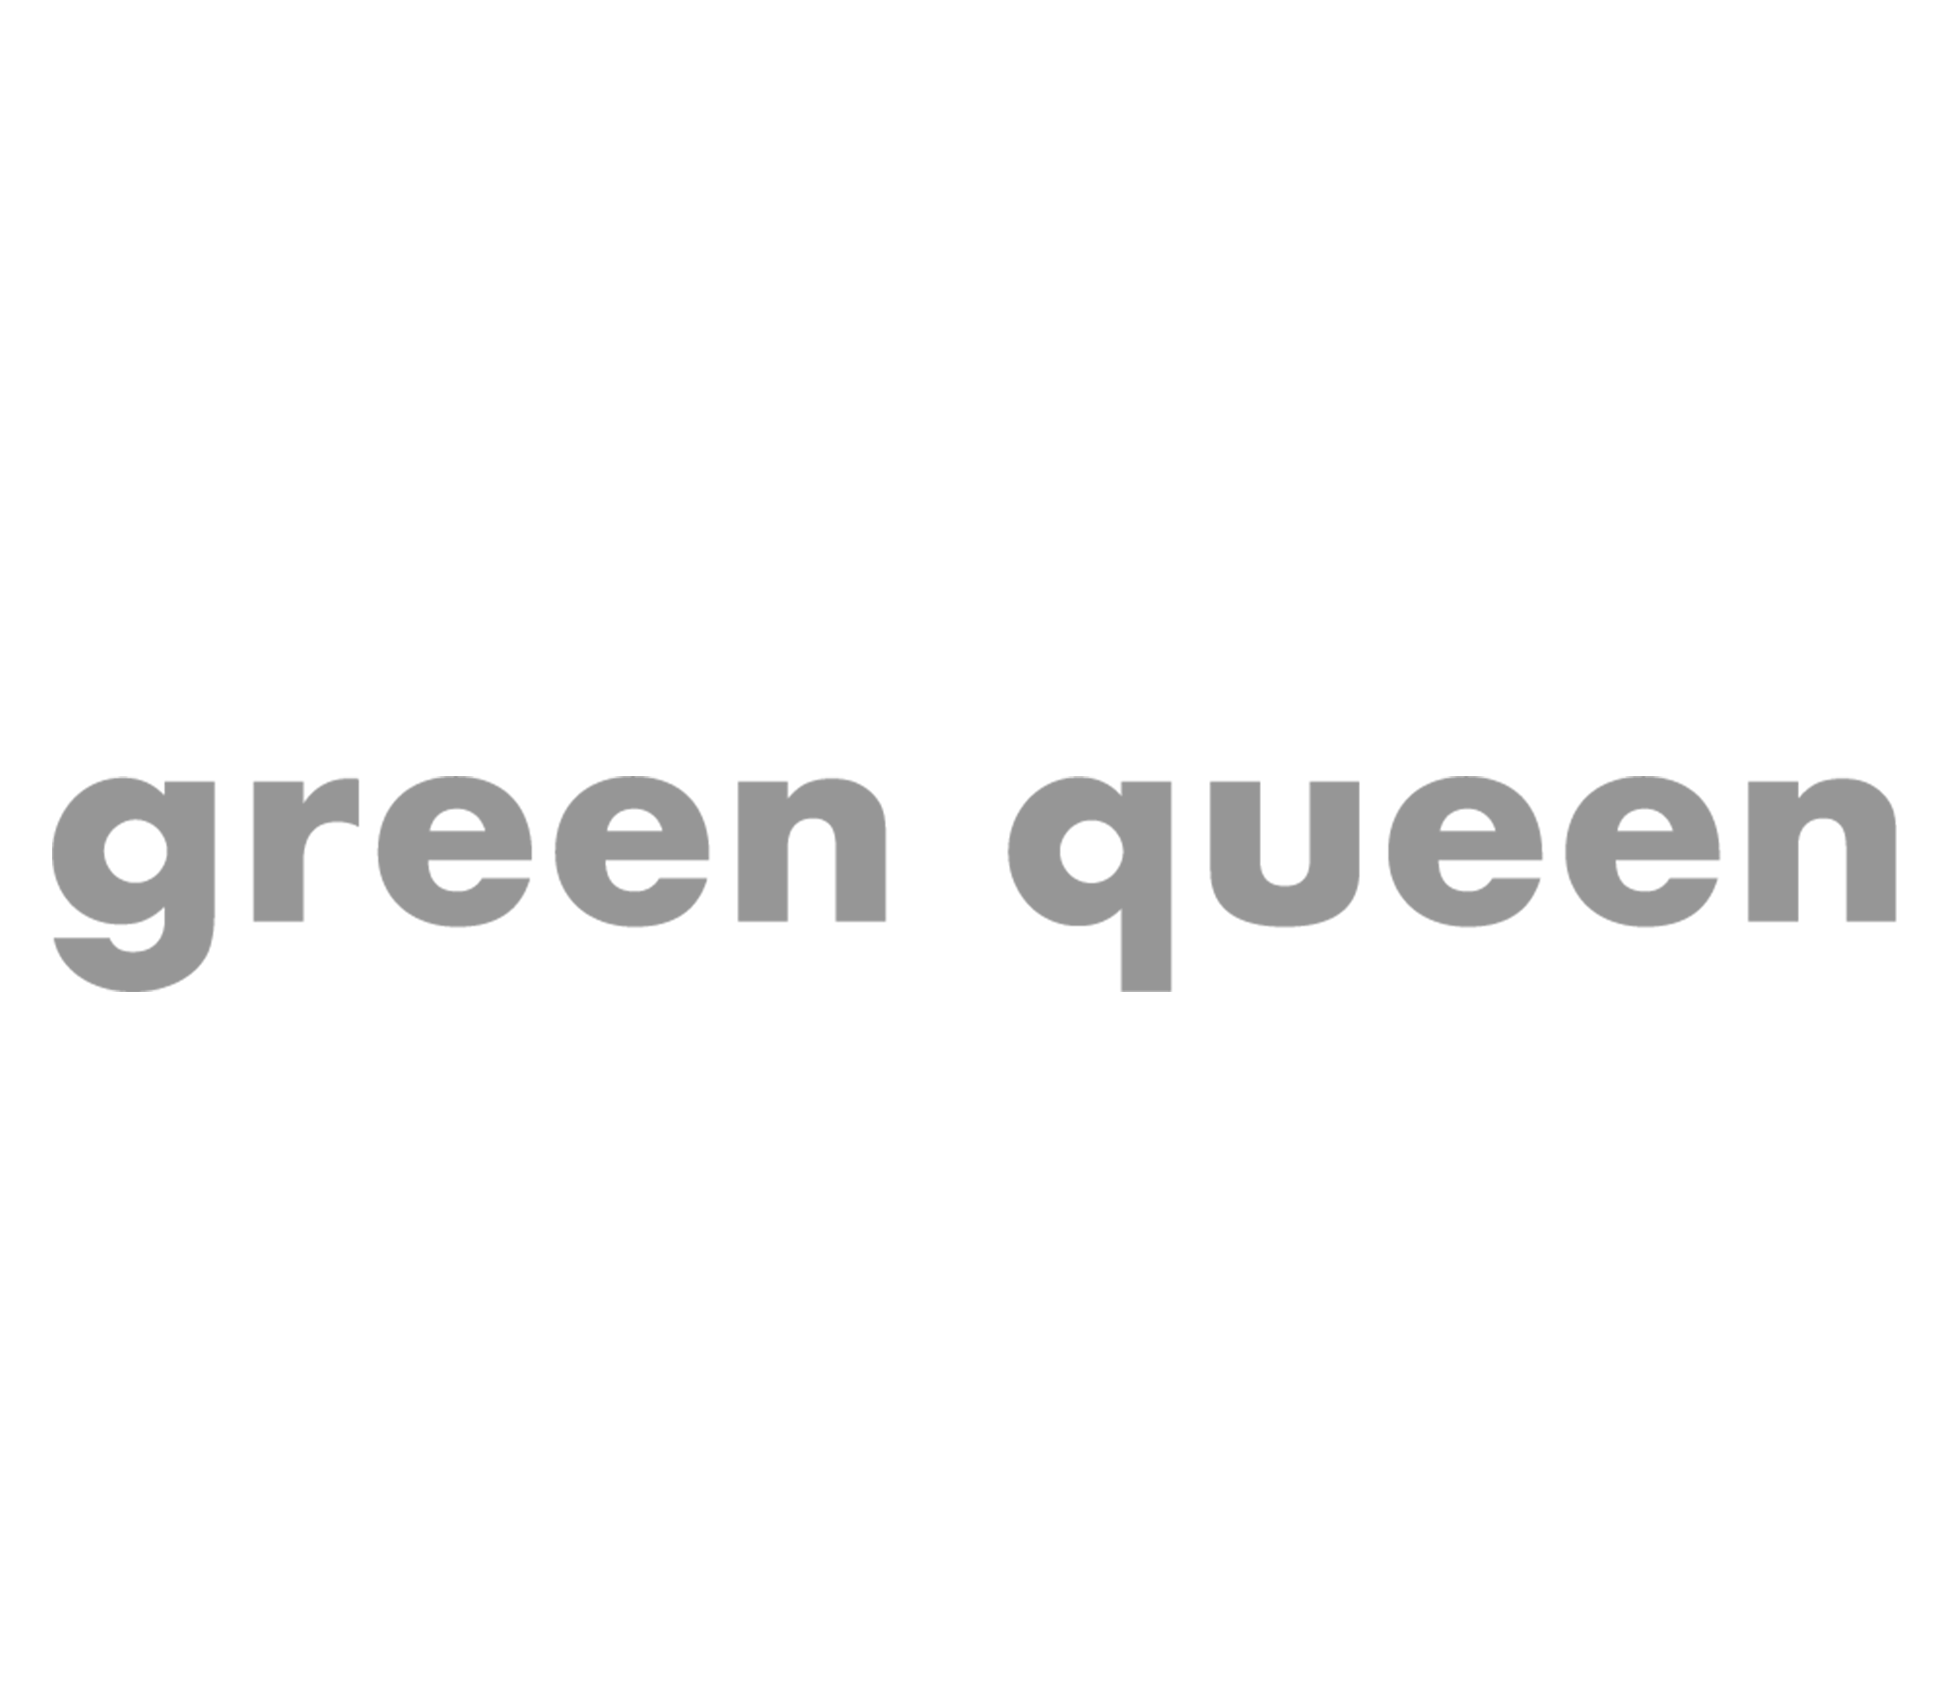 Green queen